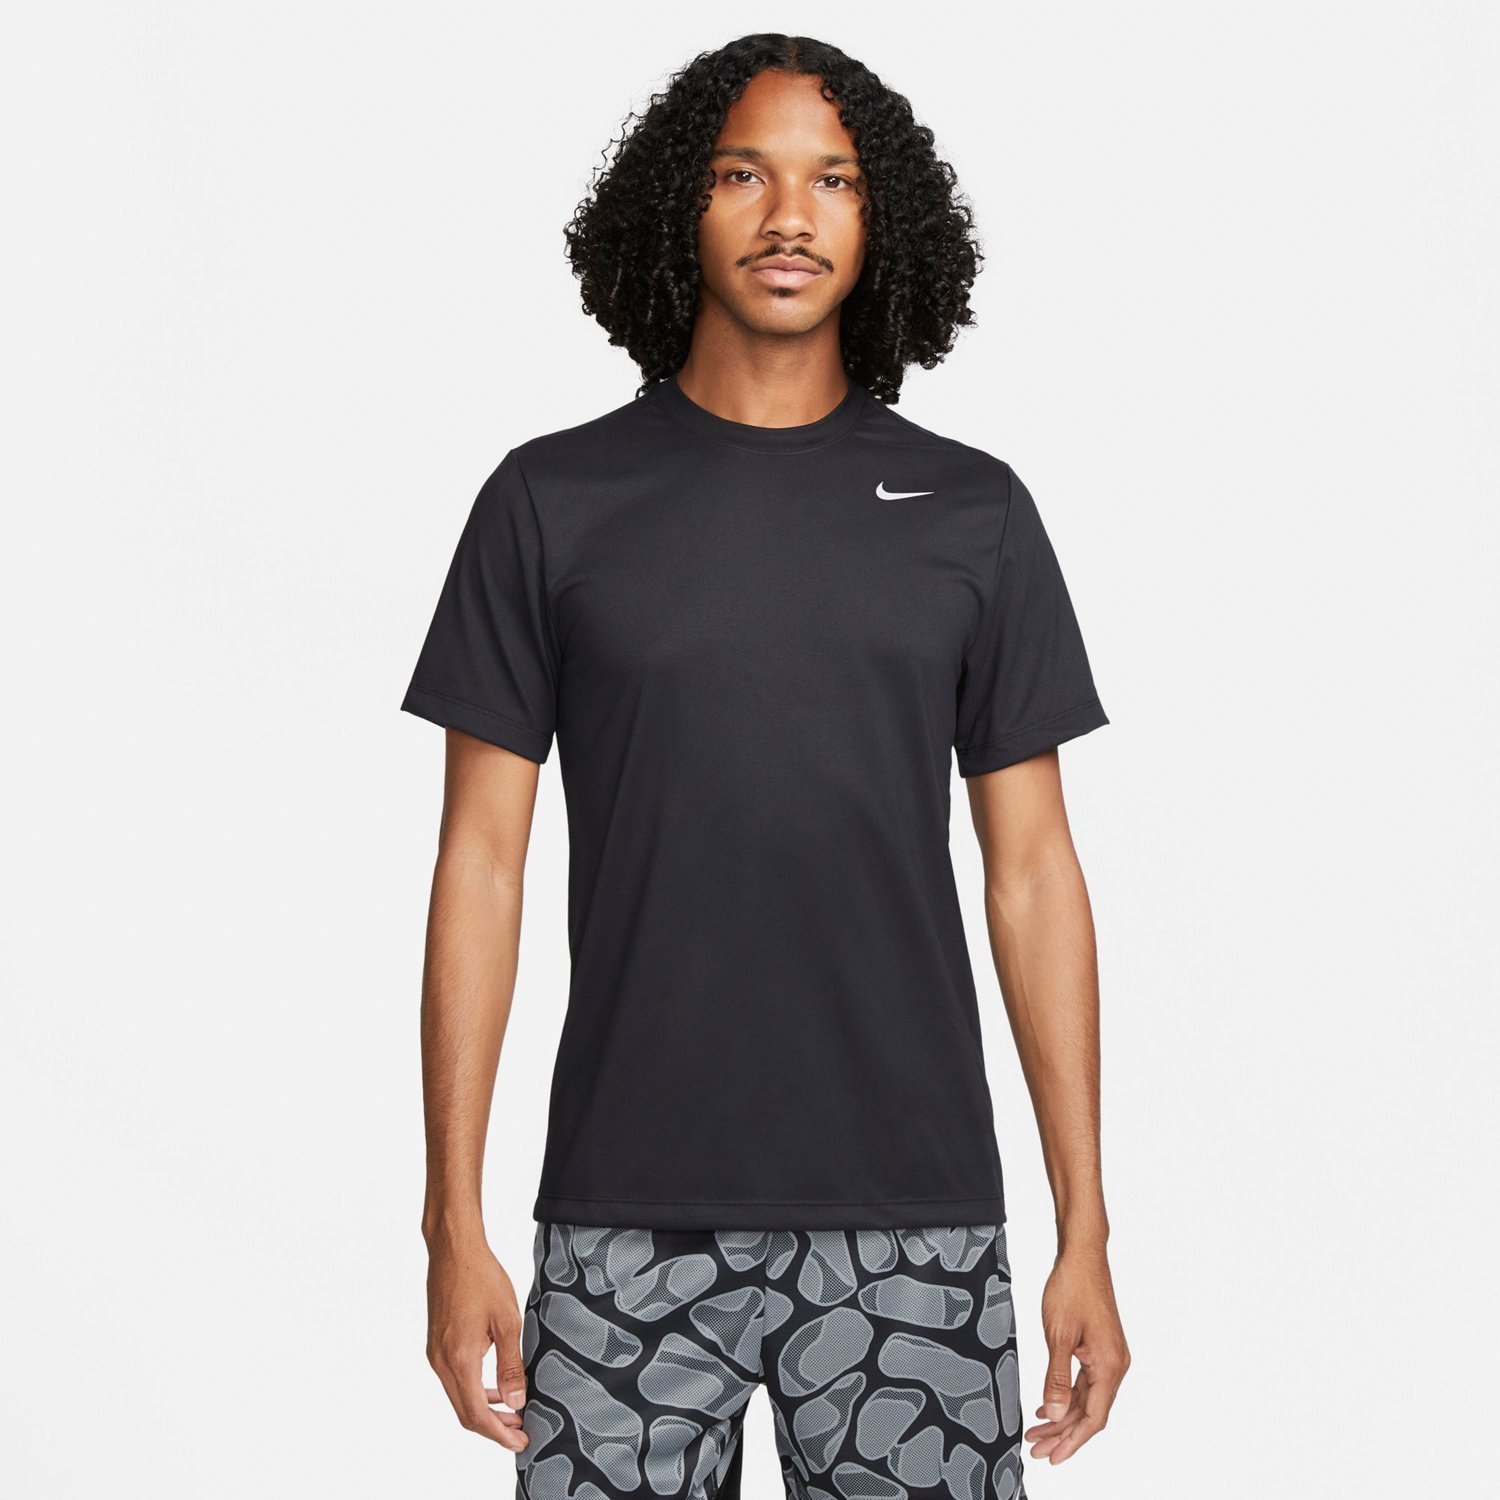 Nike Dri-FIT 'My Life' Men's Basketball T-Shirt